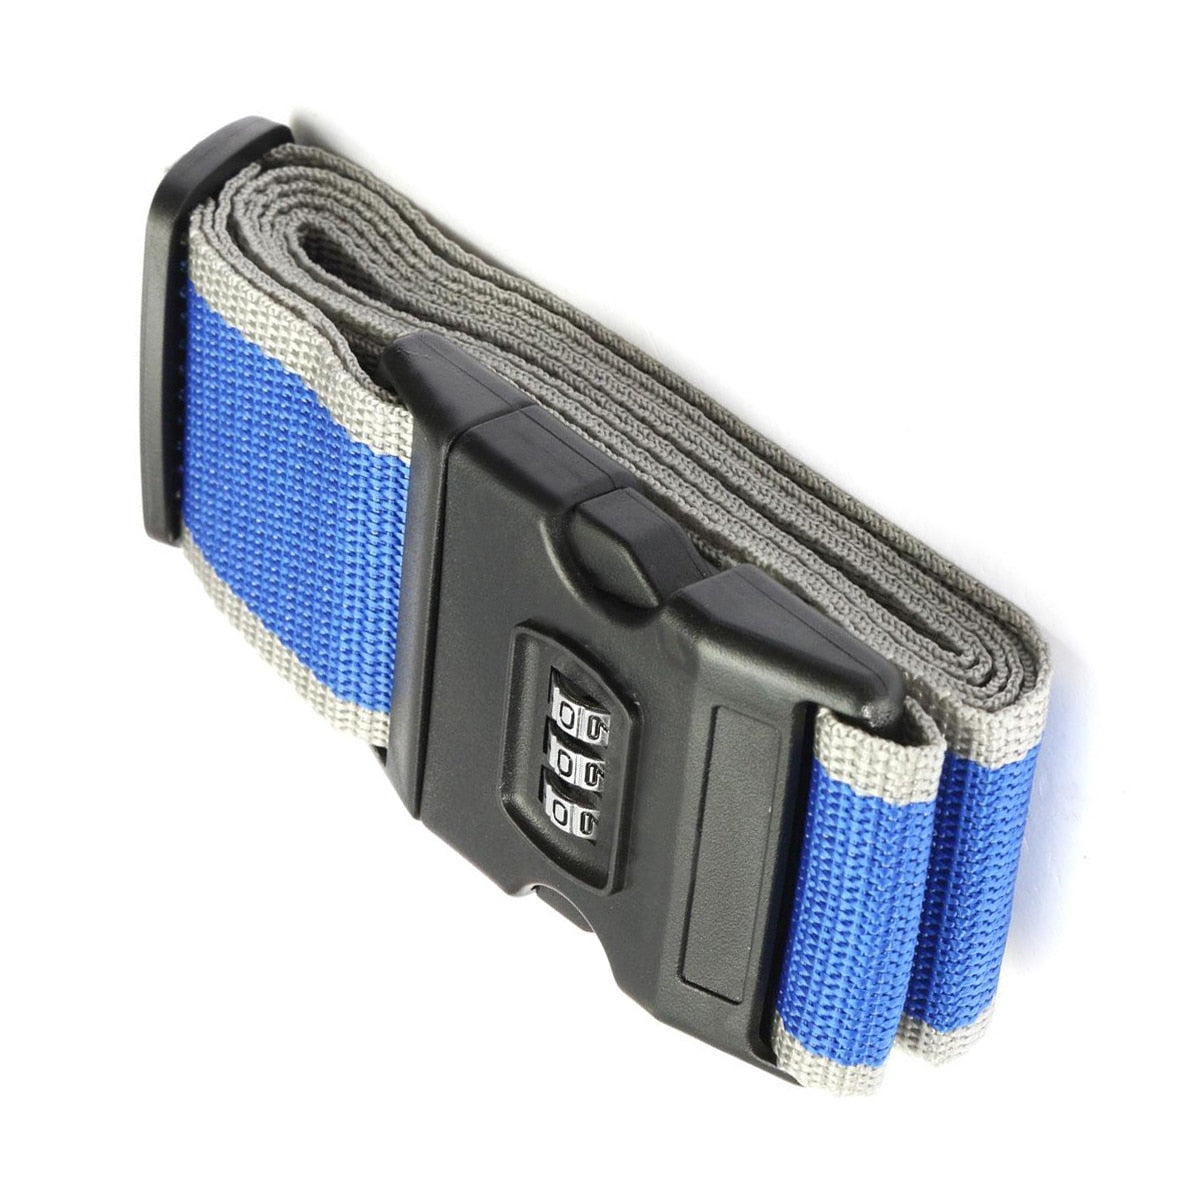 Safety belt Belt Lock Combination Travel Luggage Suitcase band color:Blue + Grey - ebowsos